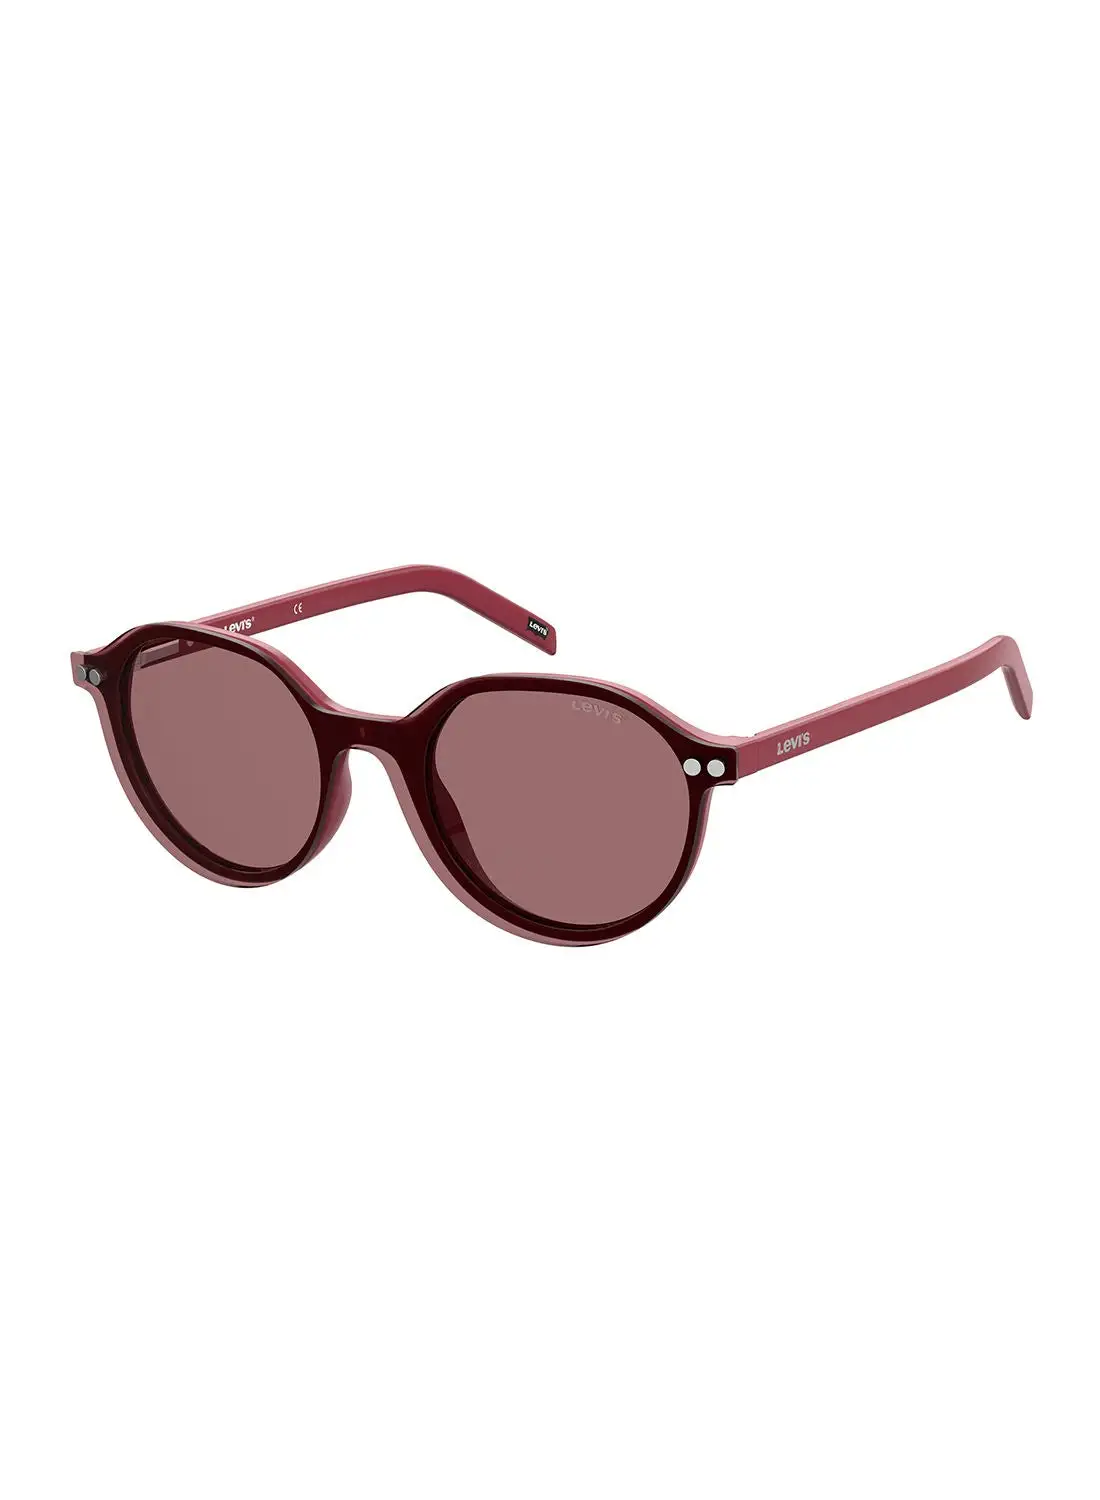 Levi's Unisex UV Protection Oval Sunglasses - Lv 1017/Cs Burgundy 50 - Lens Size: 50 Mm